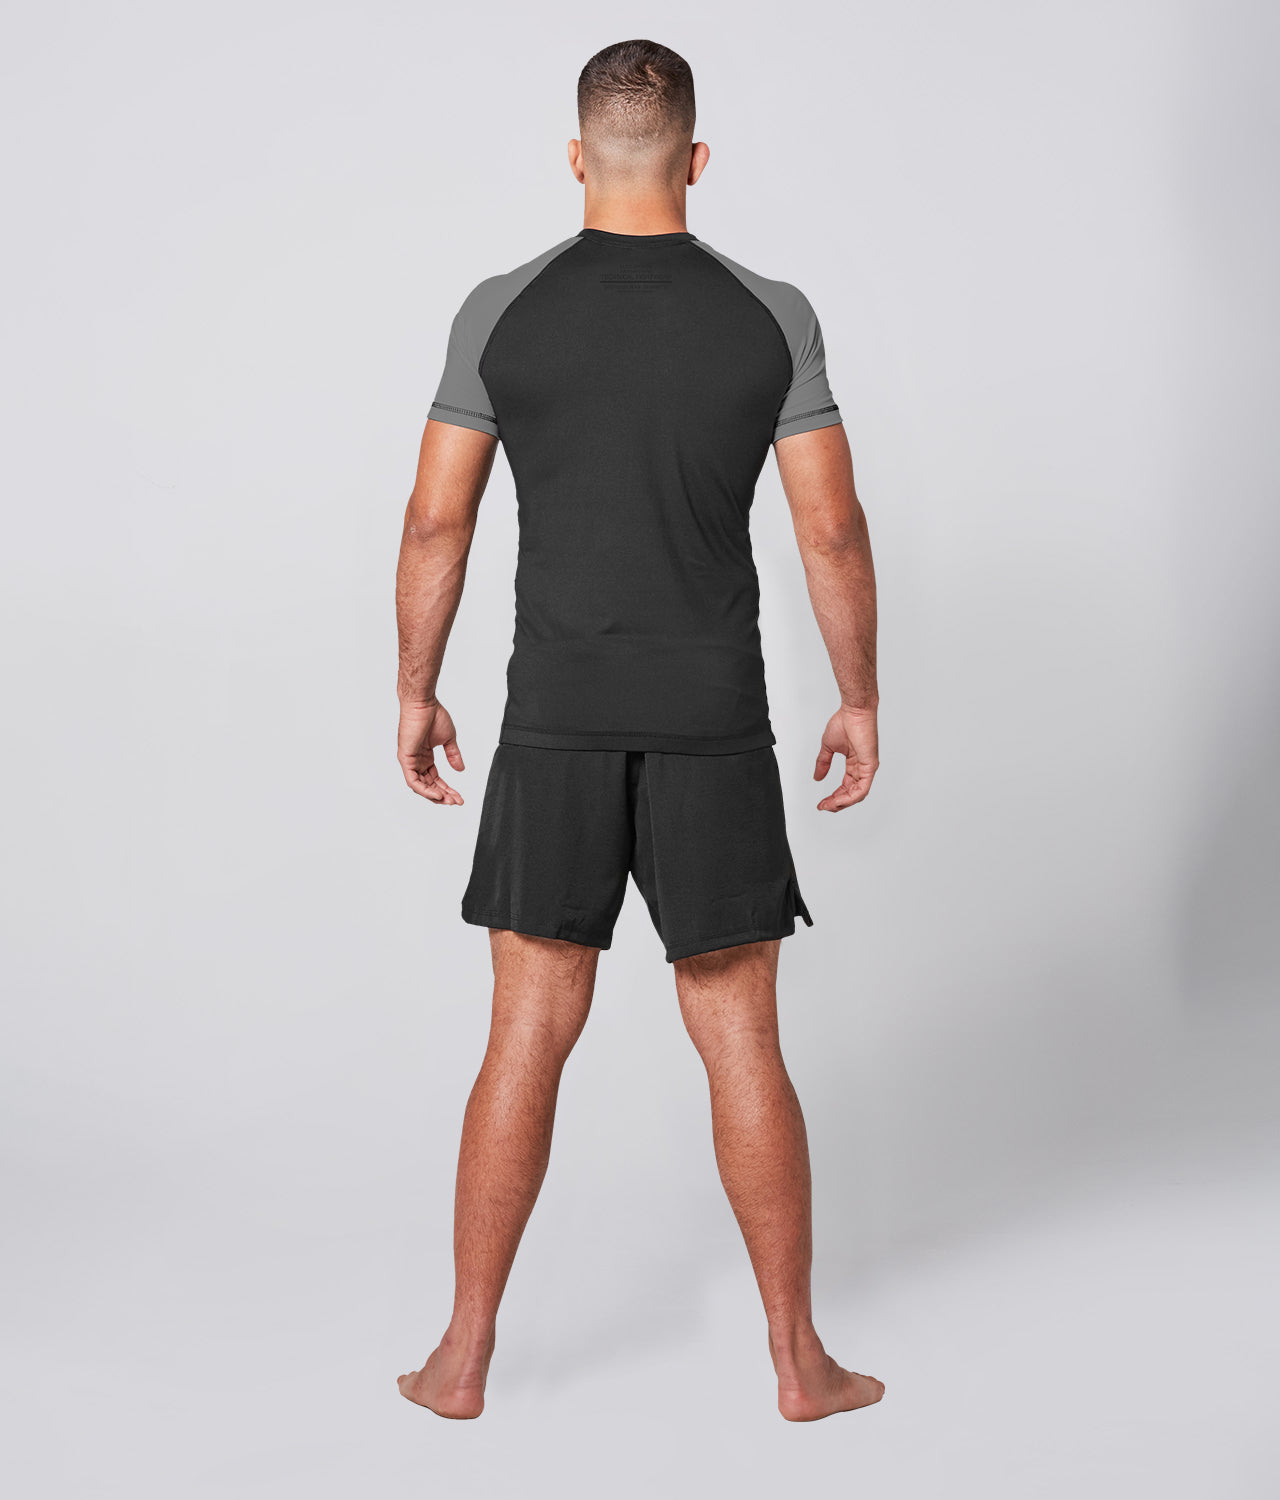 Men's Standard Gray Short Sleeve Training Rash Guard